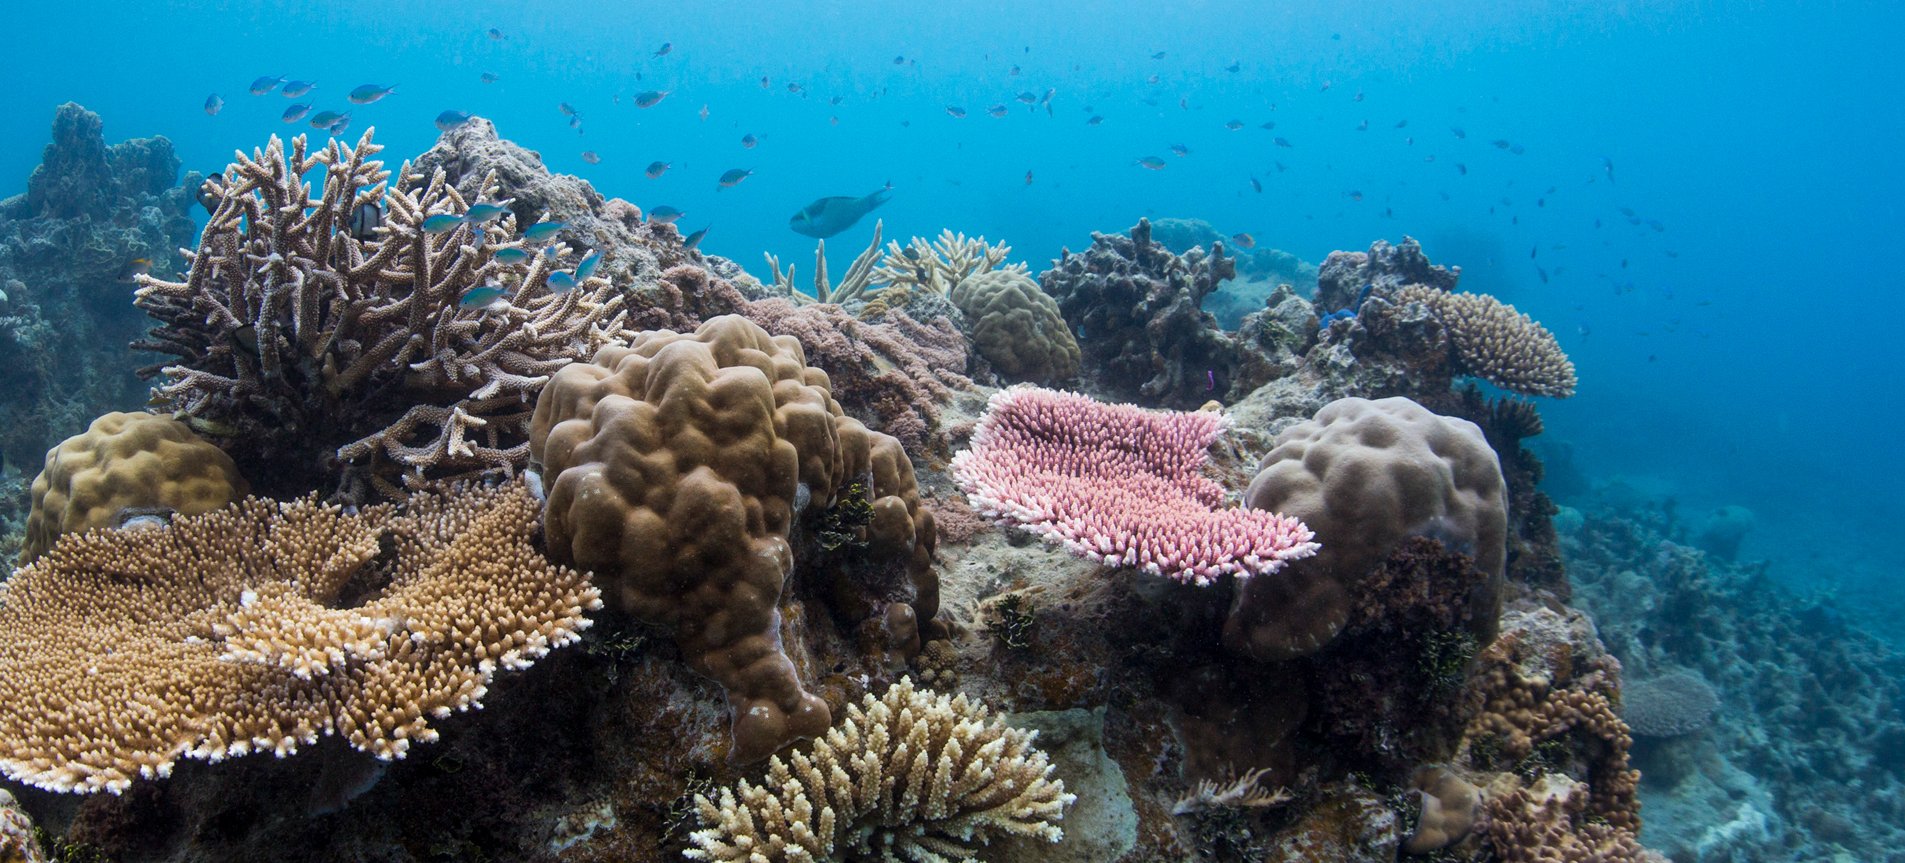 coral and fish at Bawah Reserve, Indonesia